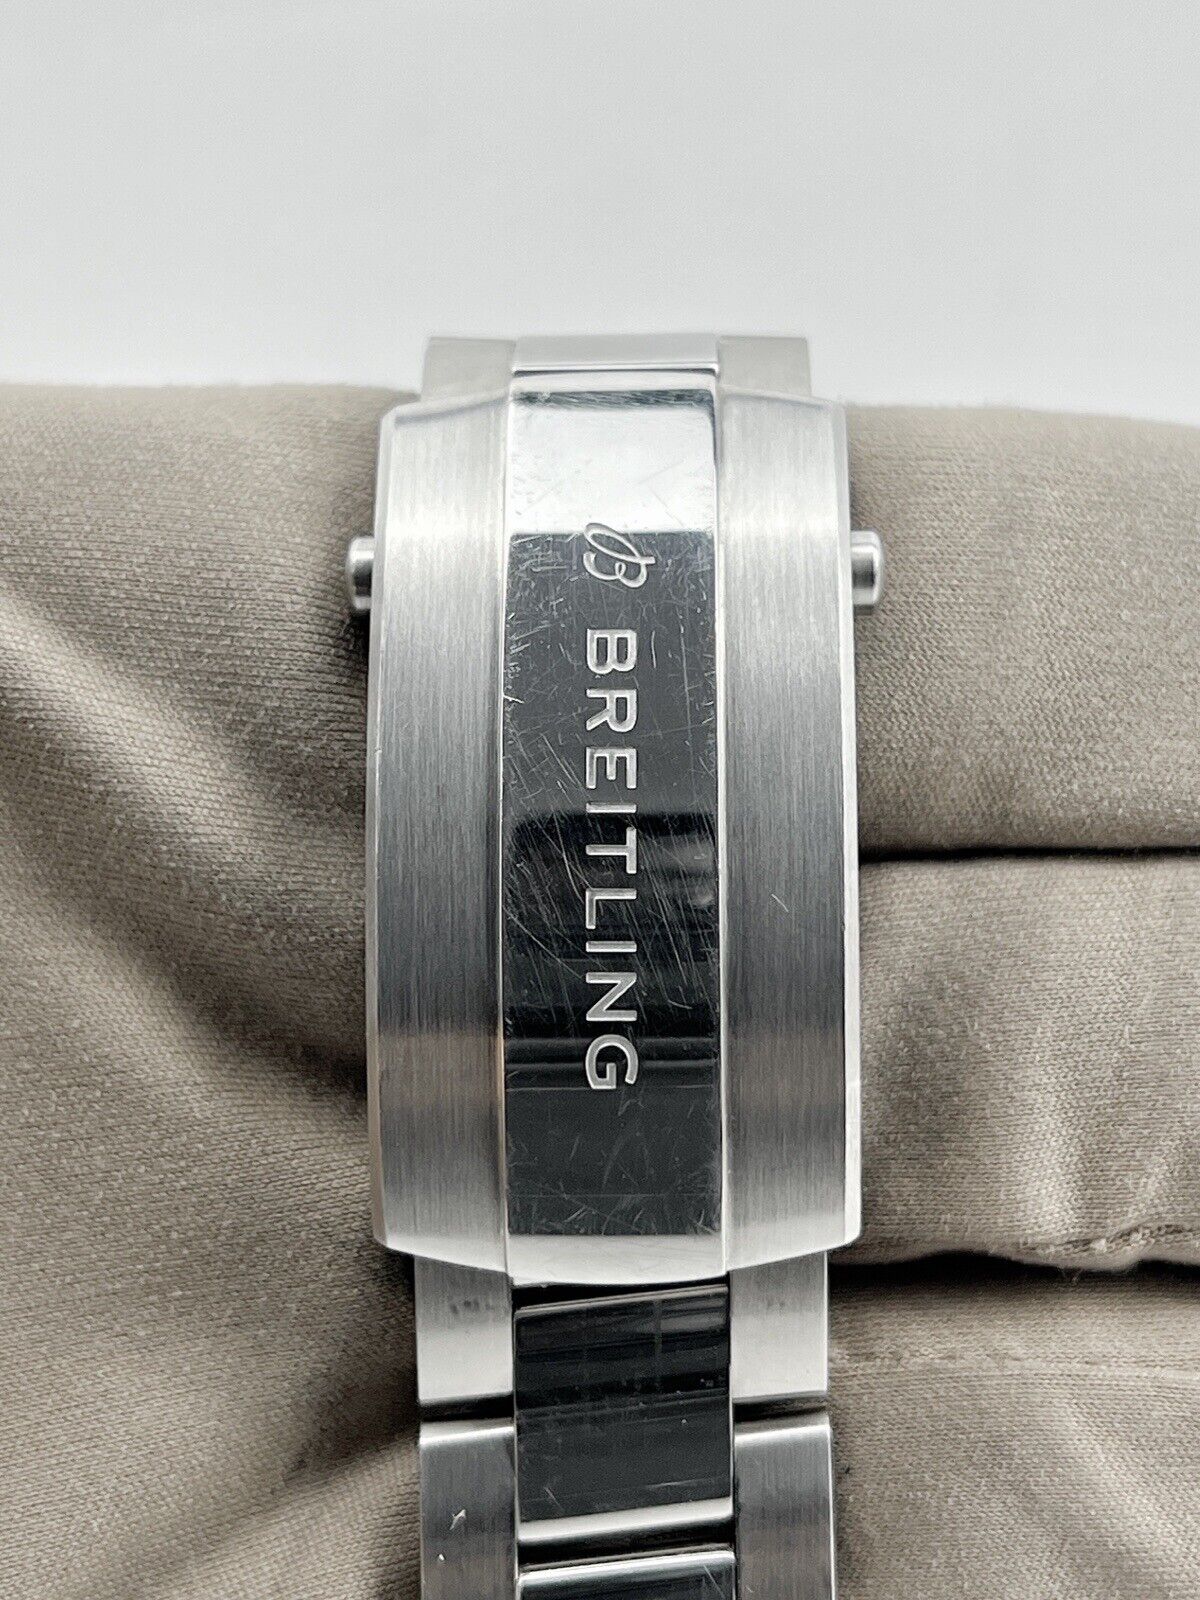 Breitling Super Ocean Automatic 44mm Blue Dial Automatic Men's Watch A17376 B&P